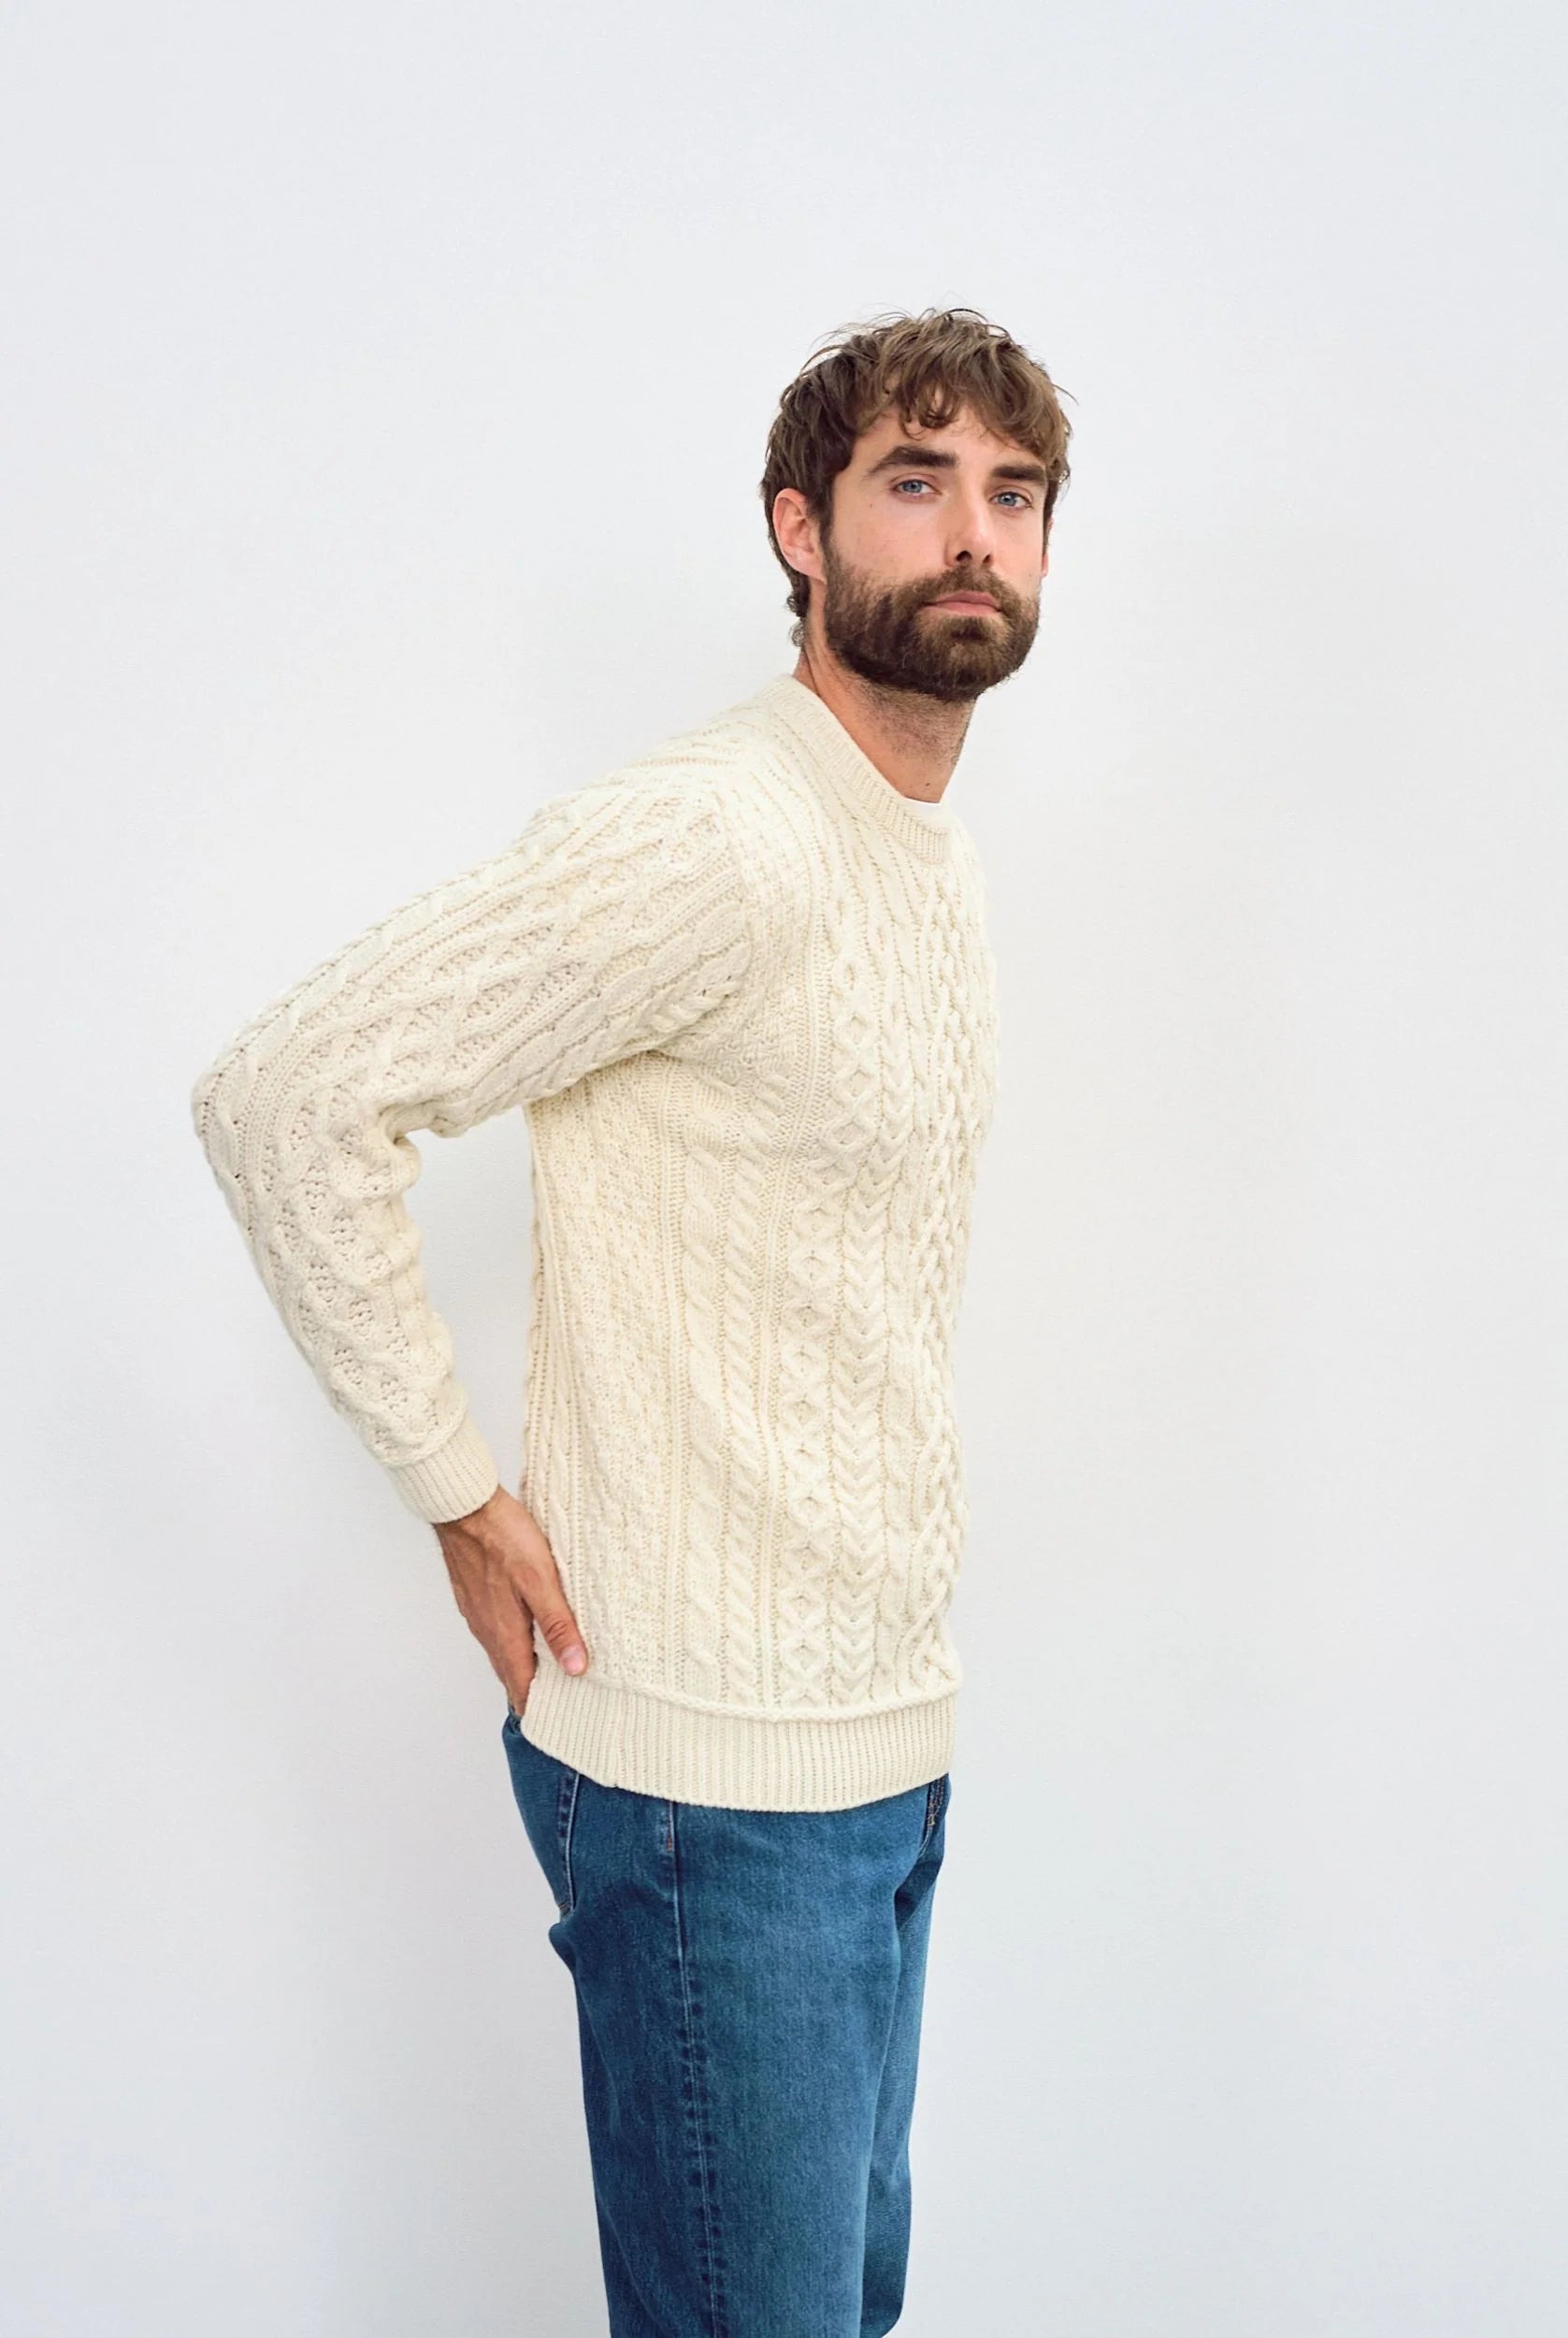 Inishturk Mens Aran Sweater - Cream B420 367